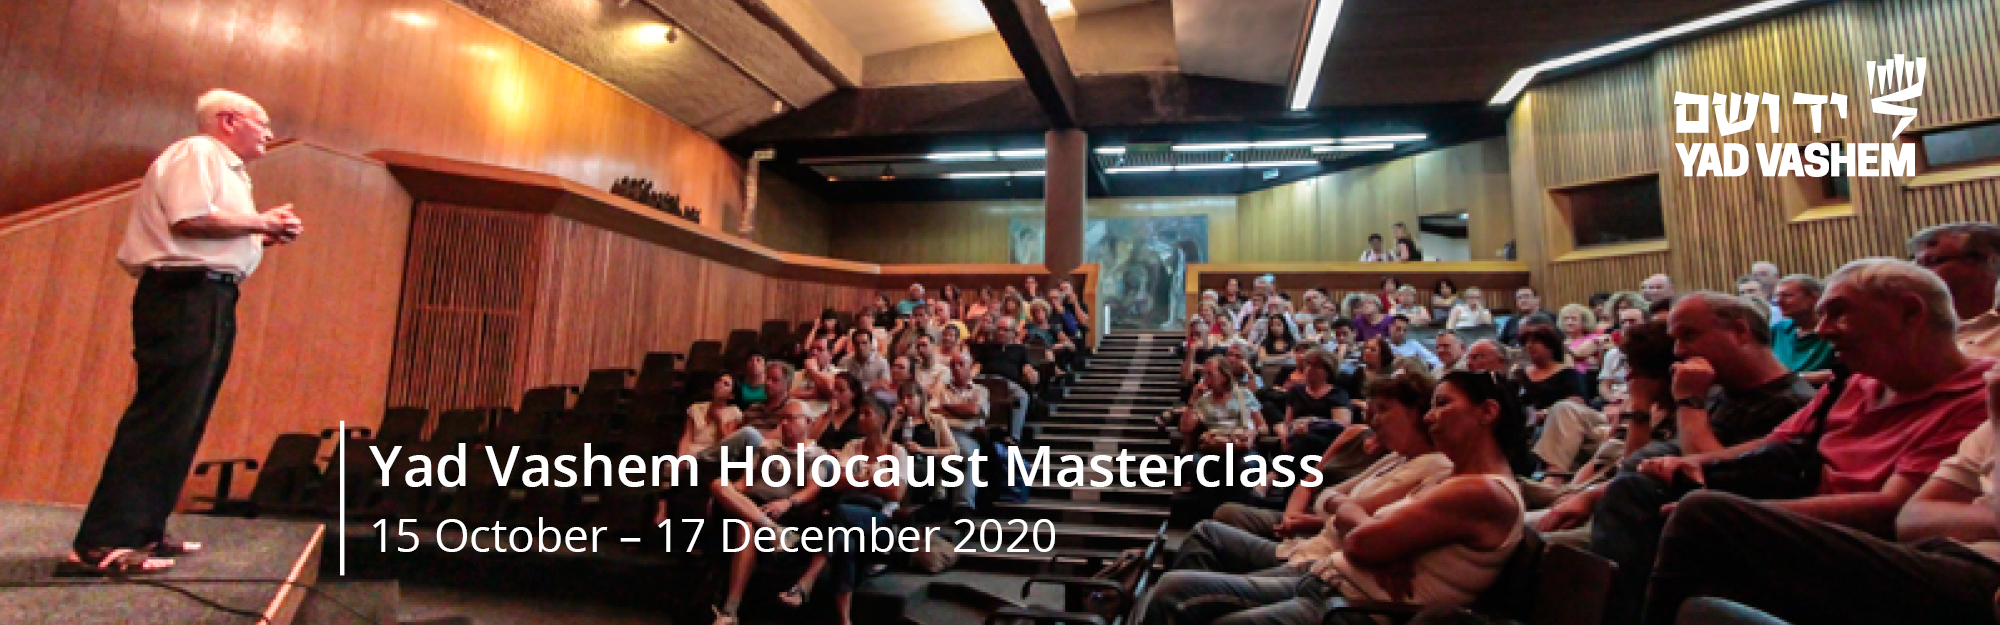 Yad Vashem Holocaust Masterclass